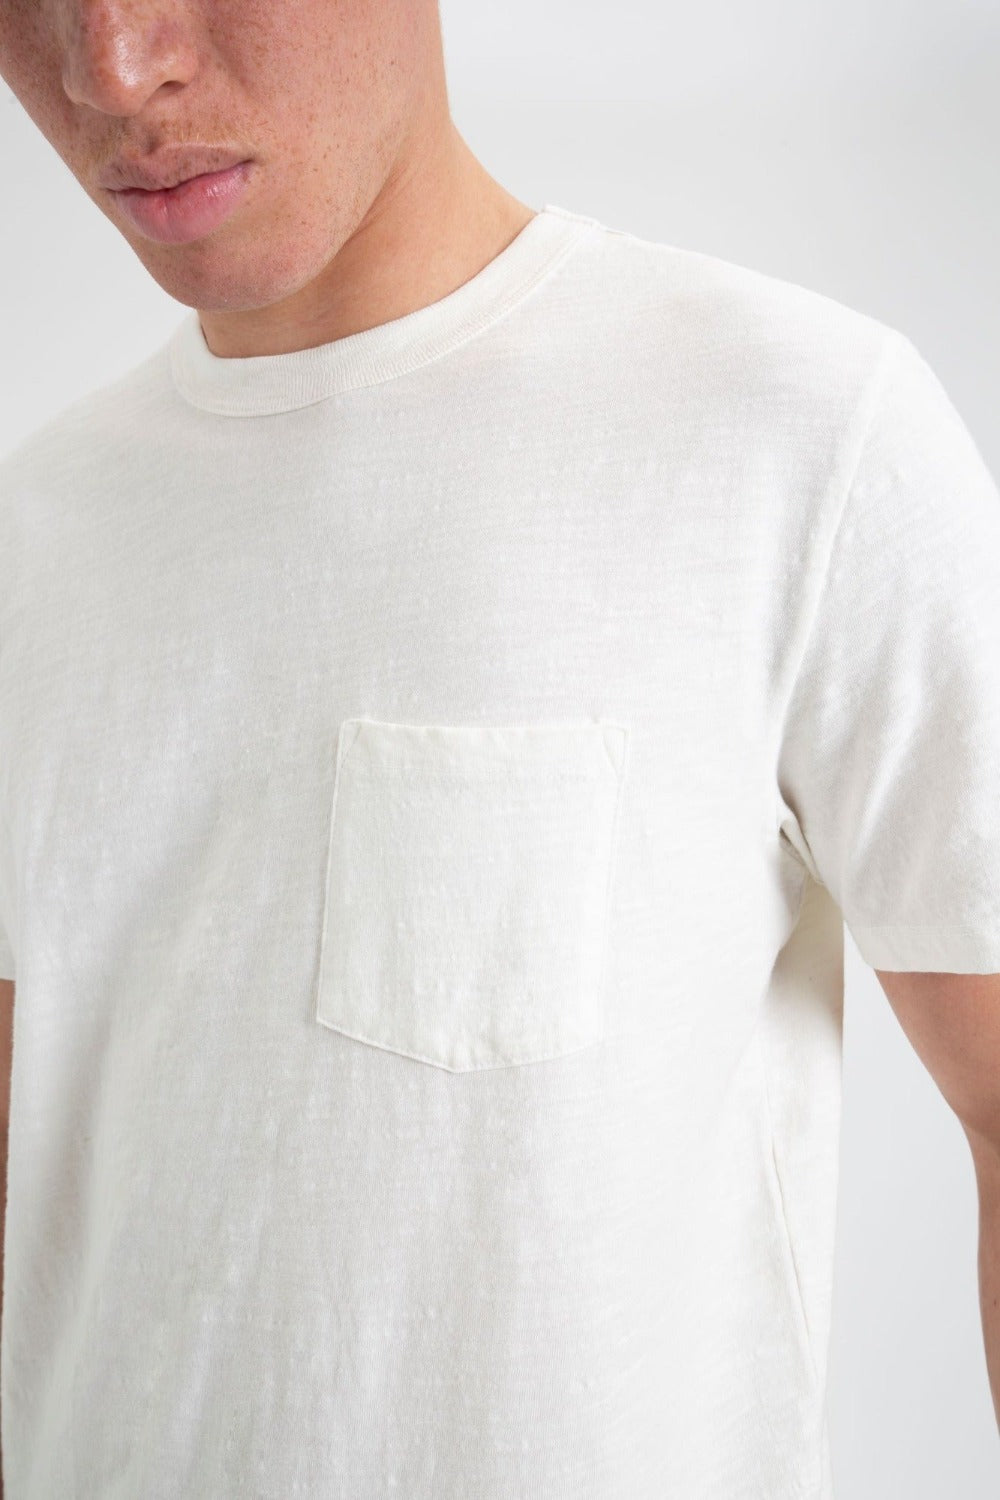 Garment Dye Beatnik Short-Sleeve T-Shirt - White